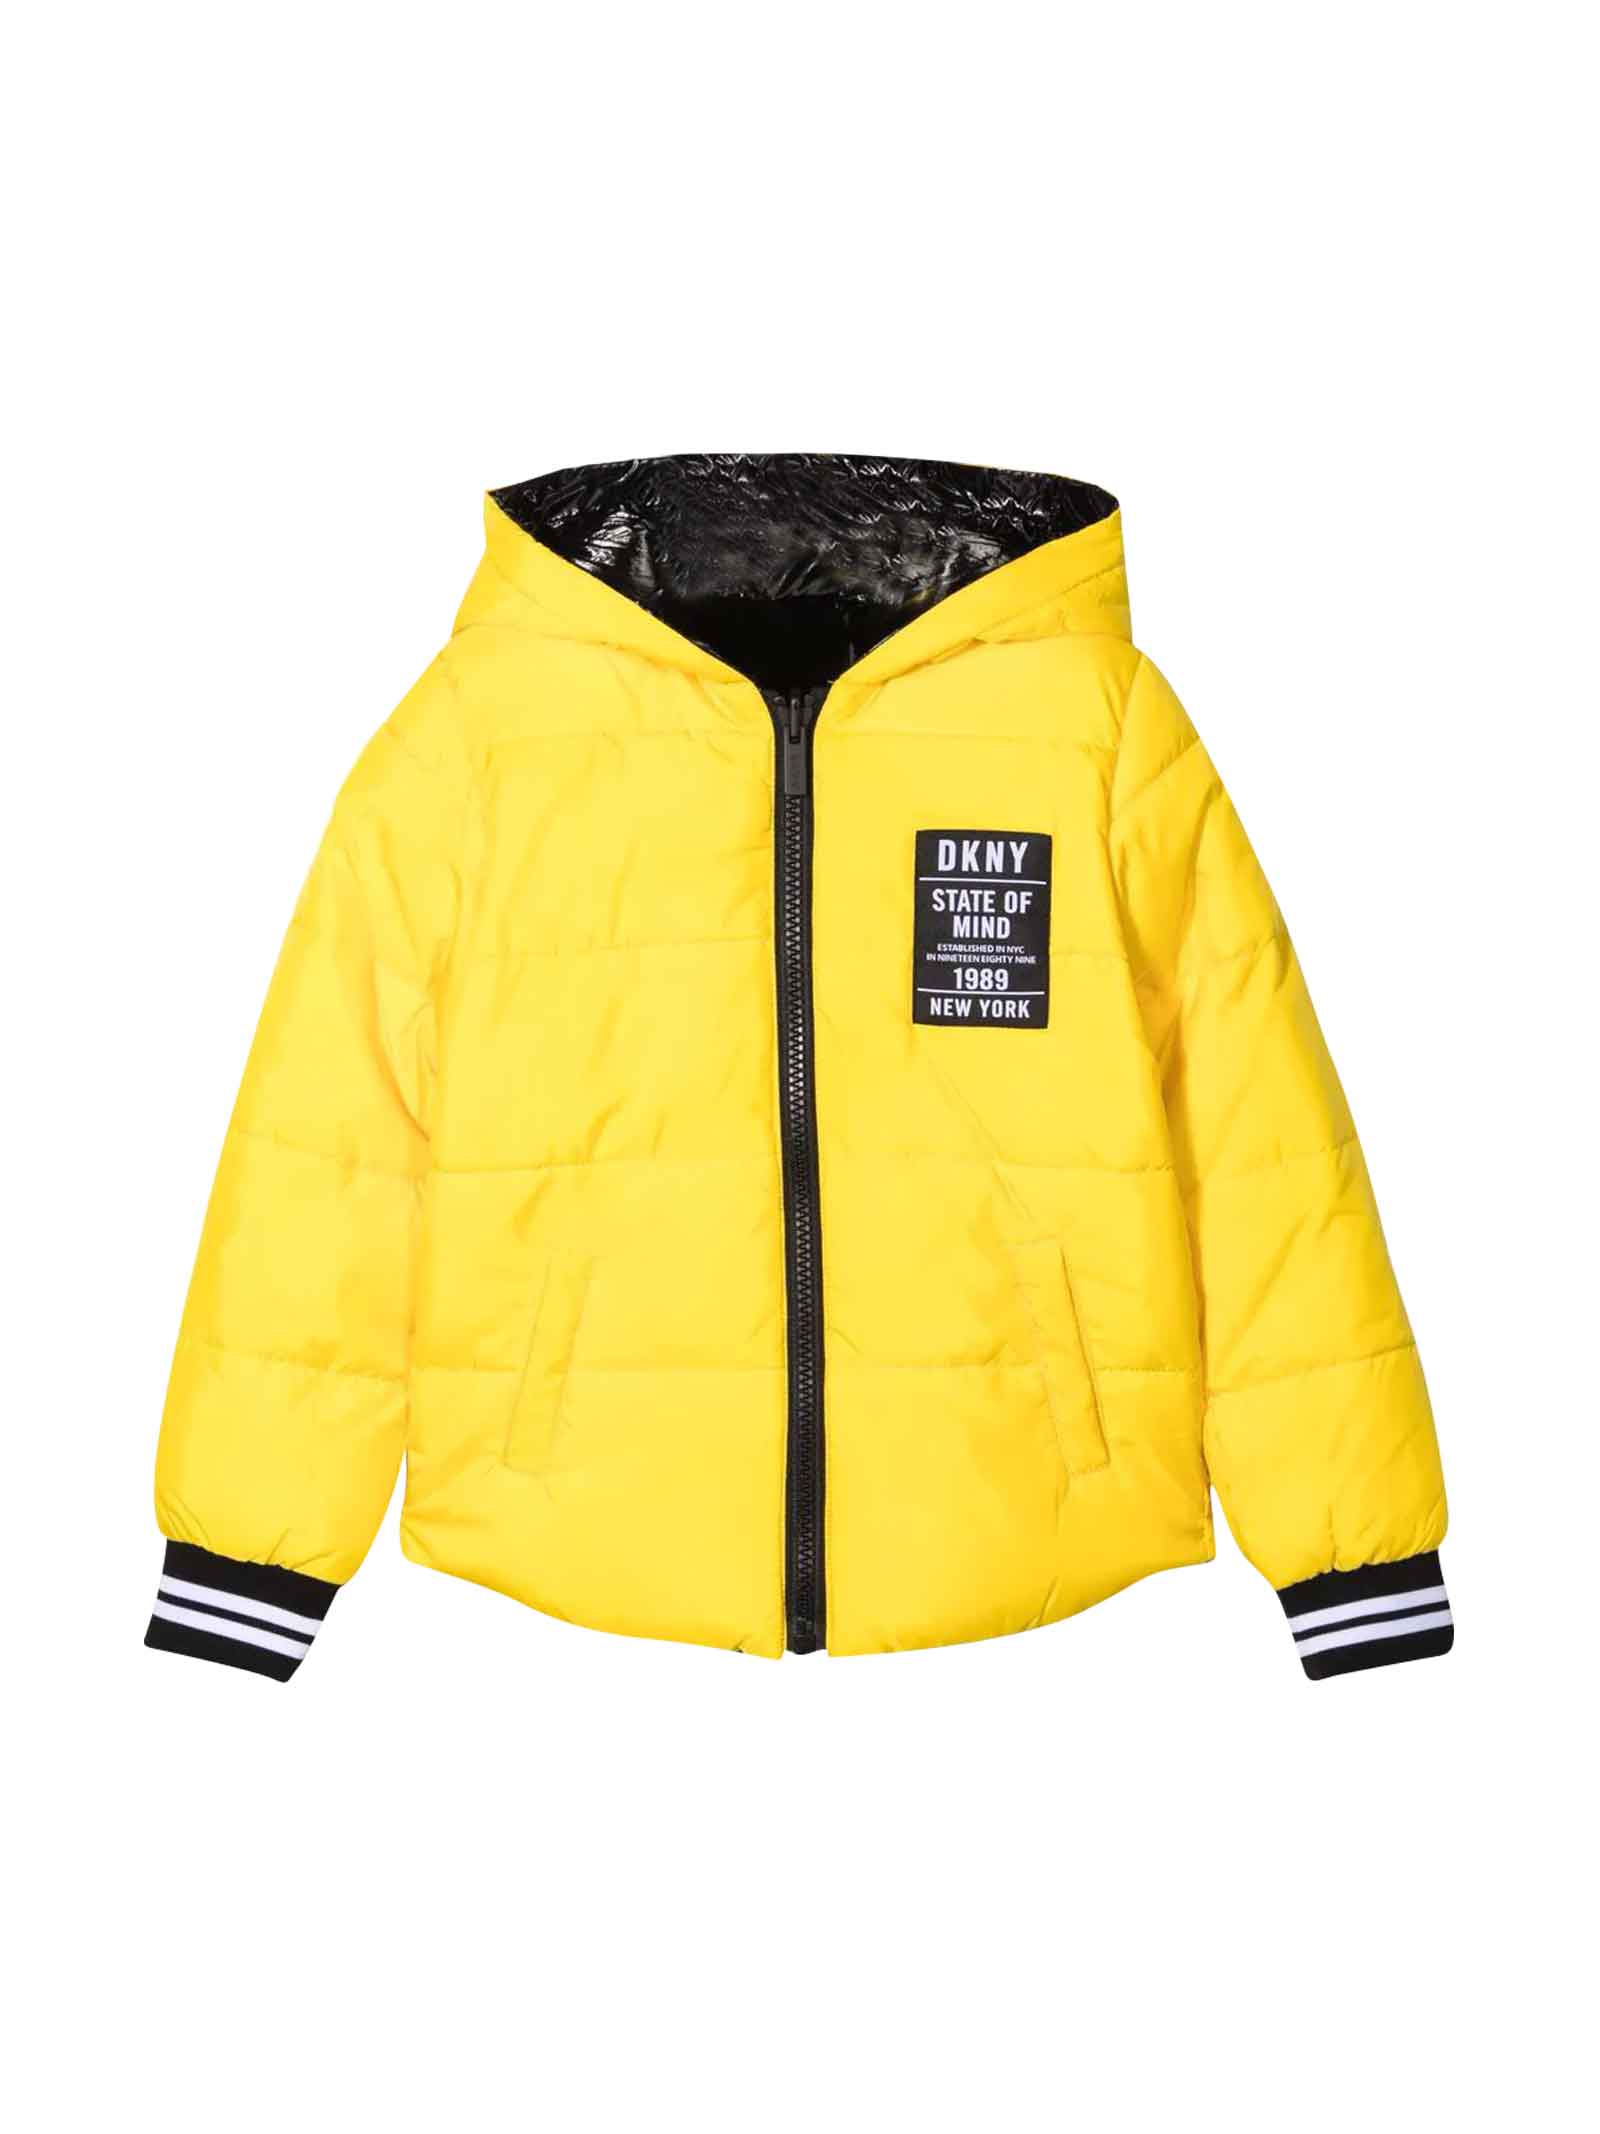 DKNY Unisex Yellow Down Jacket